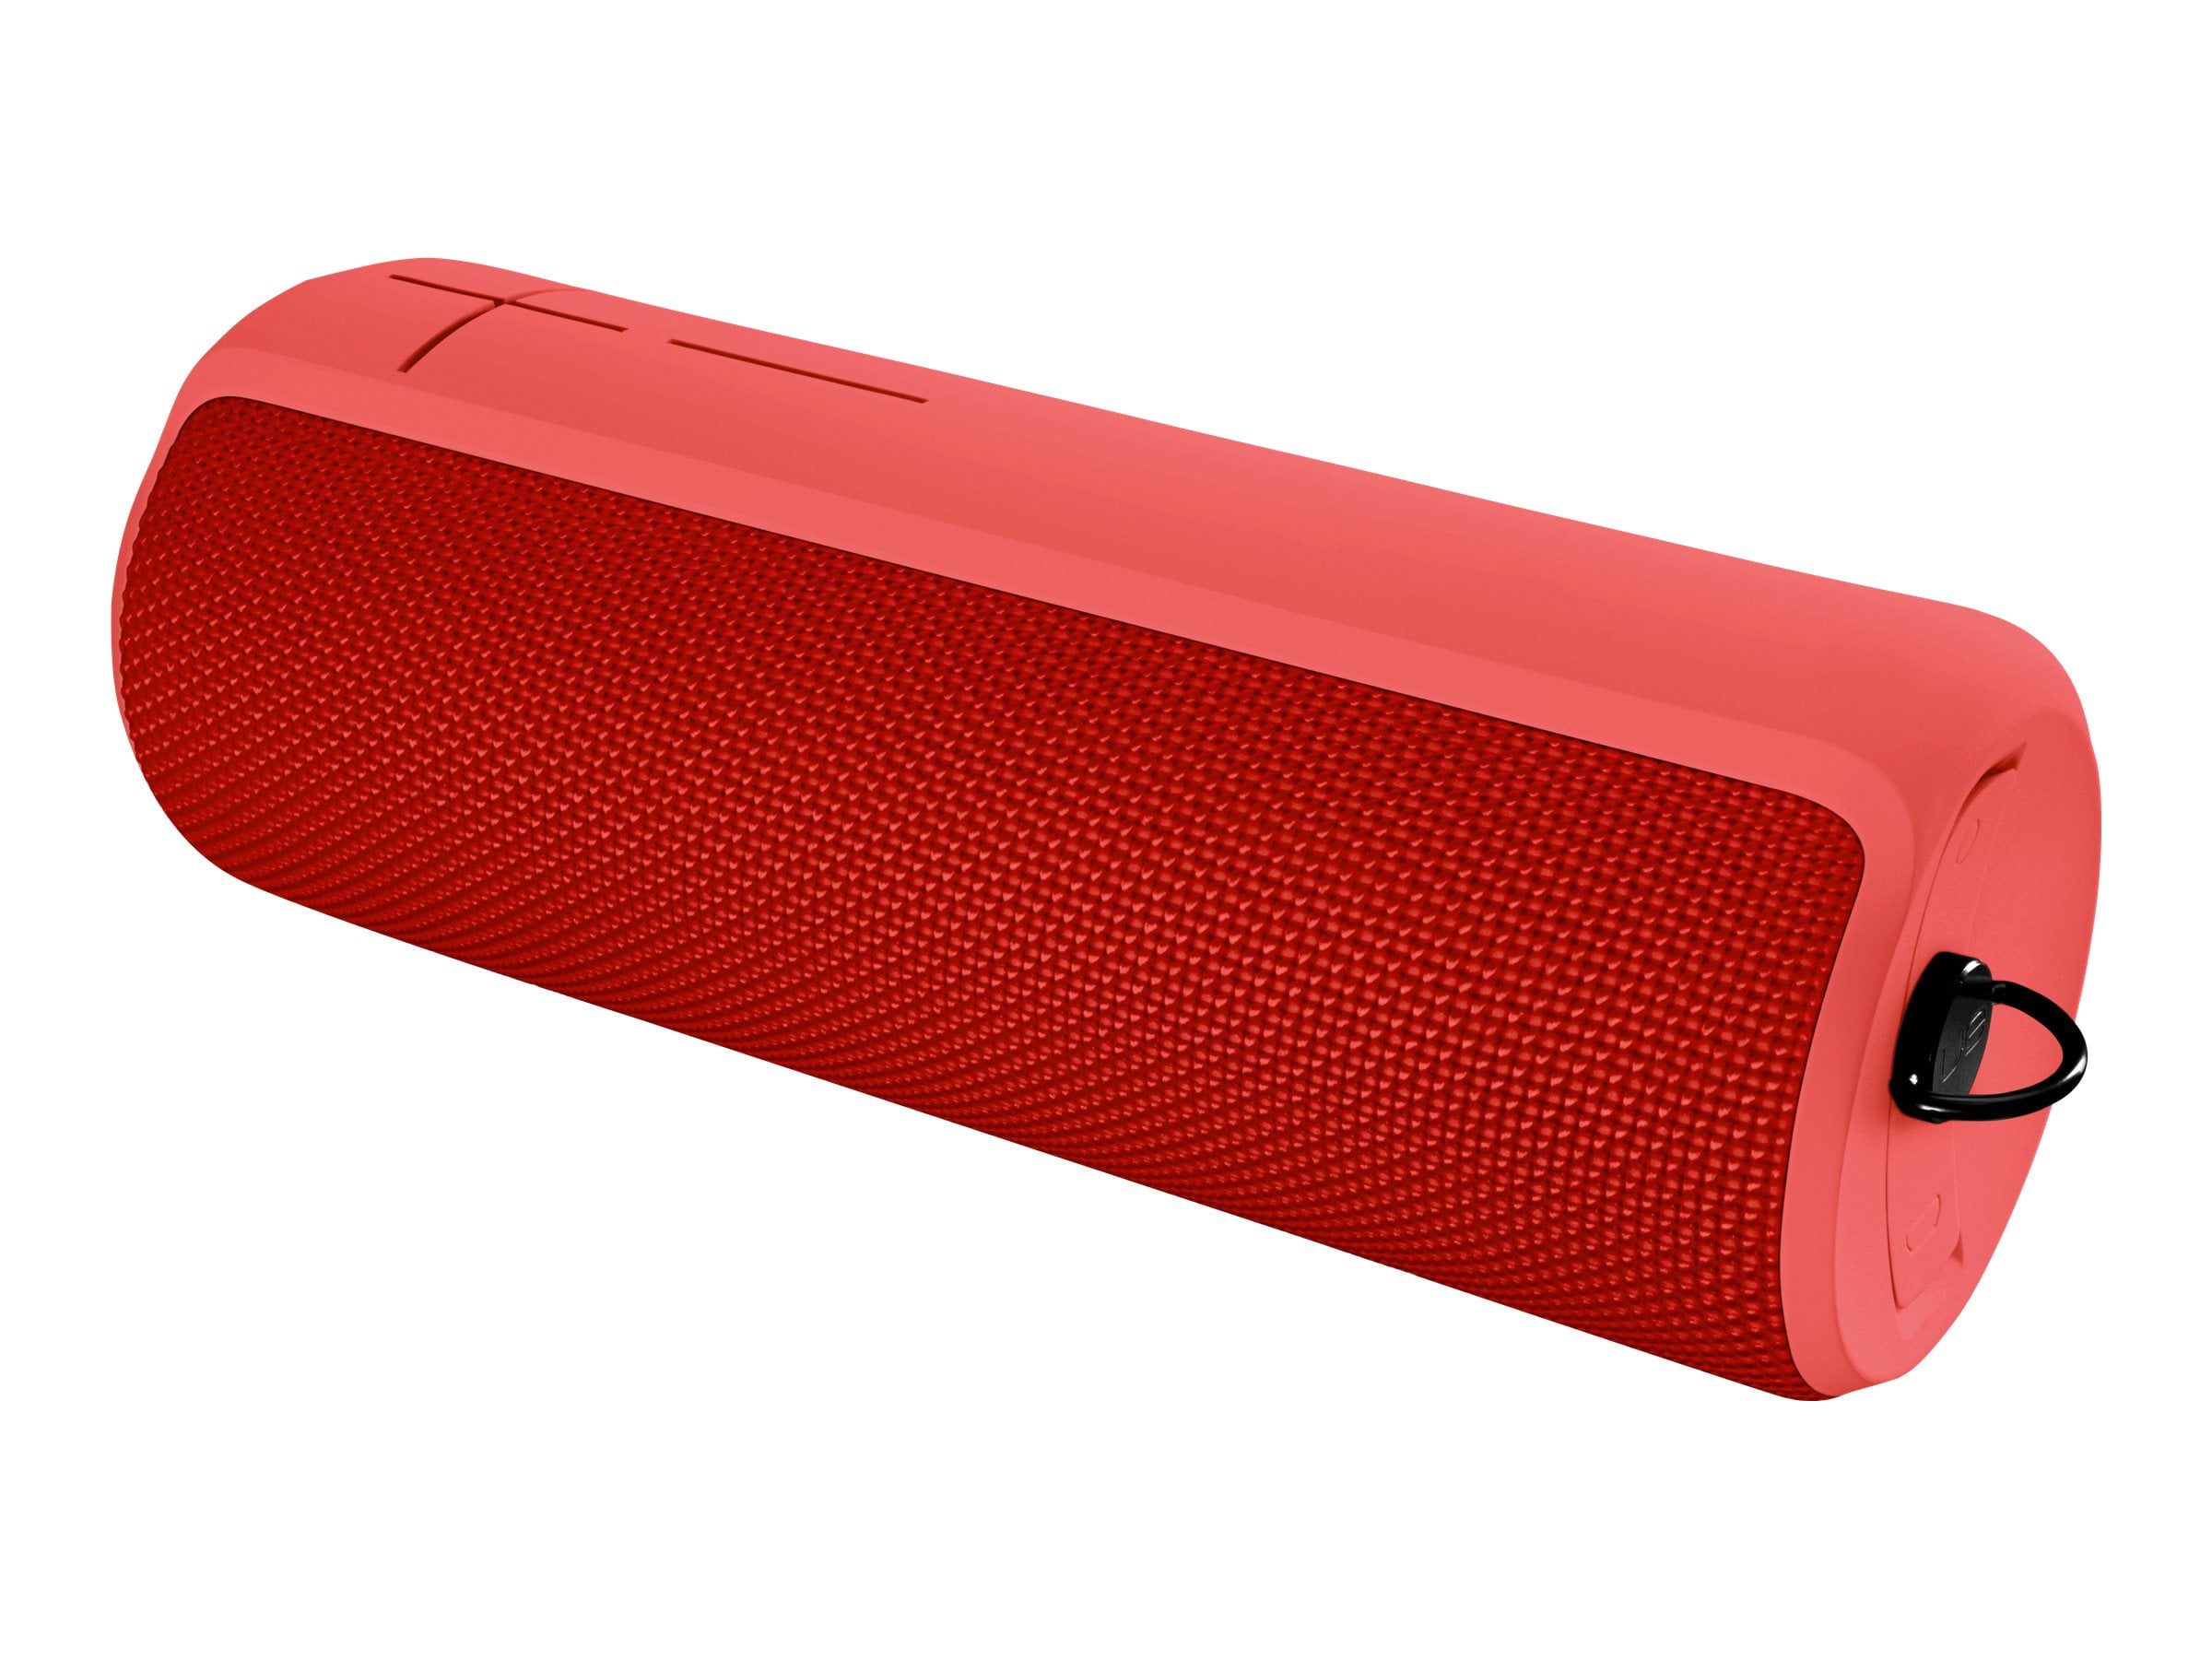 UE Boom 2 review: Top Bluetooth speaker gets improved sound, full  waterproofing - CNET